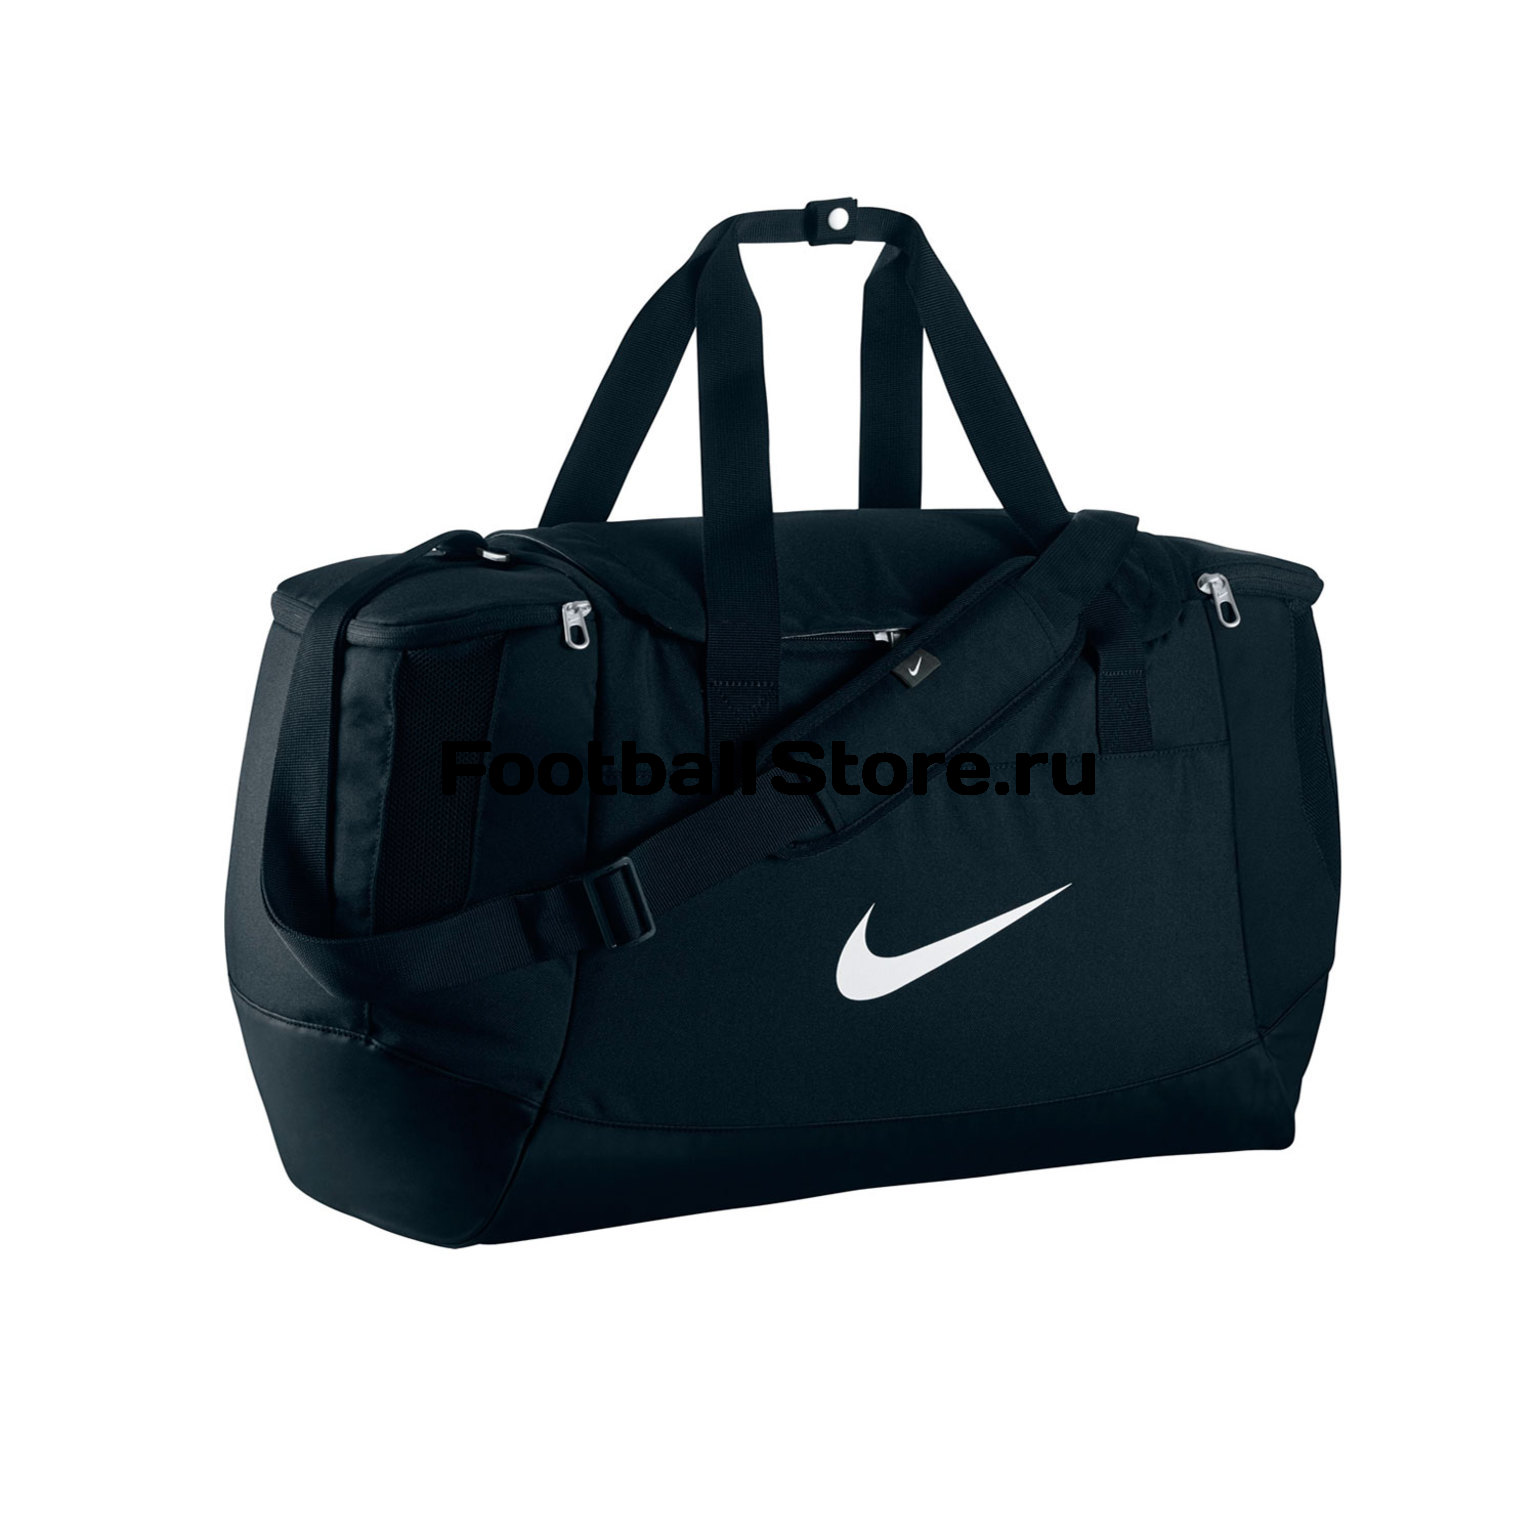 Investigación Pedagogía corto Сумка Nike Club Team Swoosh Duff M BA5193-010 — купить в интернет магазине  FootballStore, цена, фото, доставка